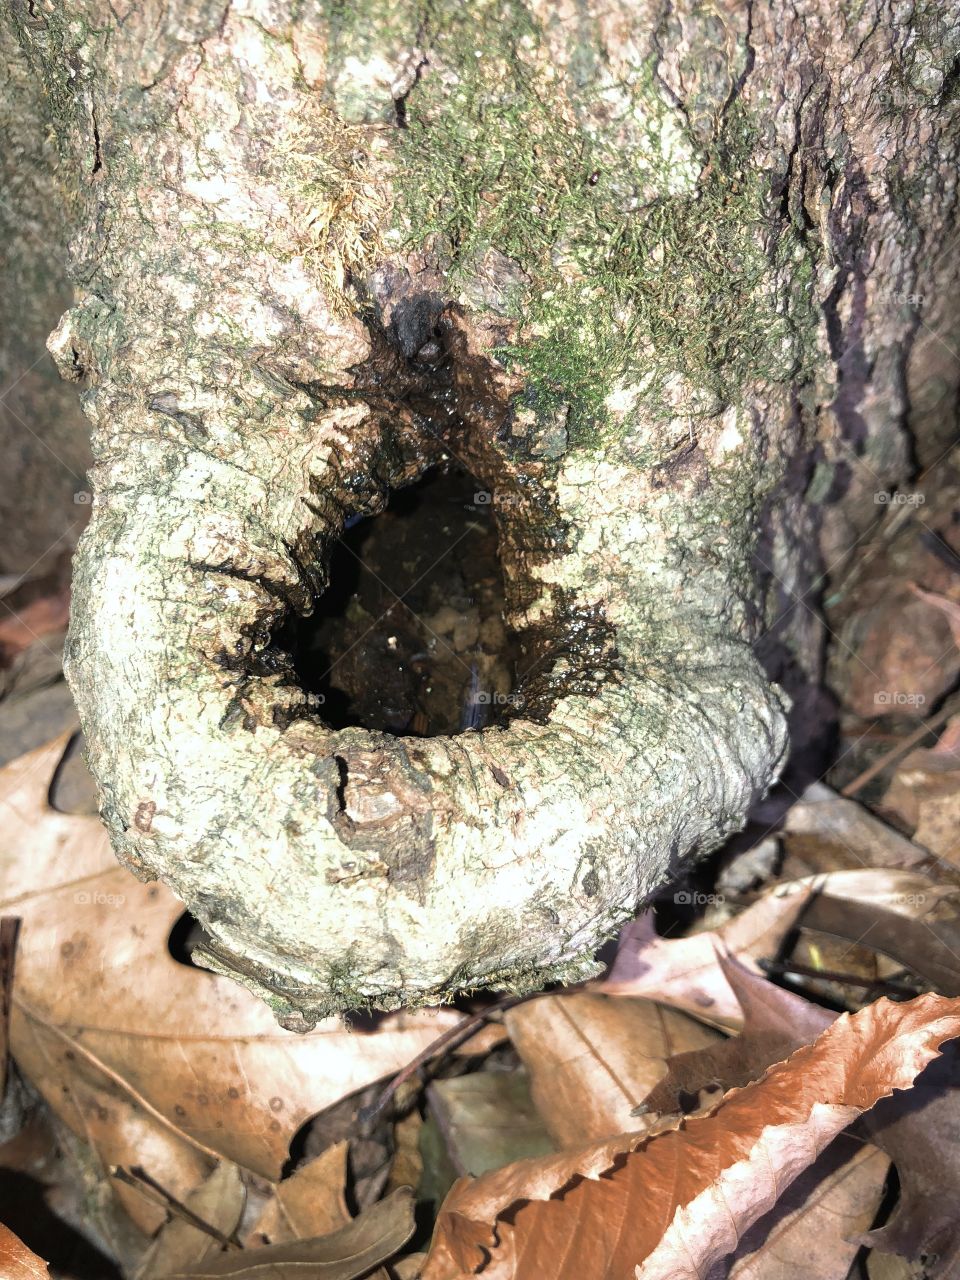 Water in tree hole